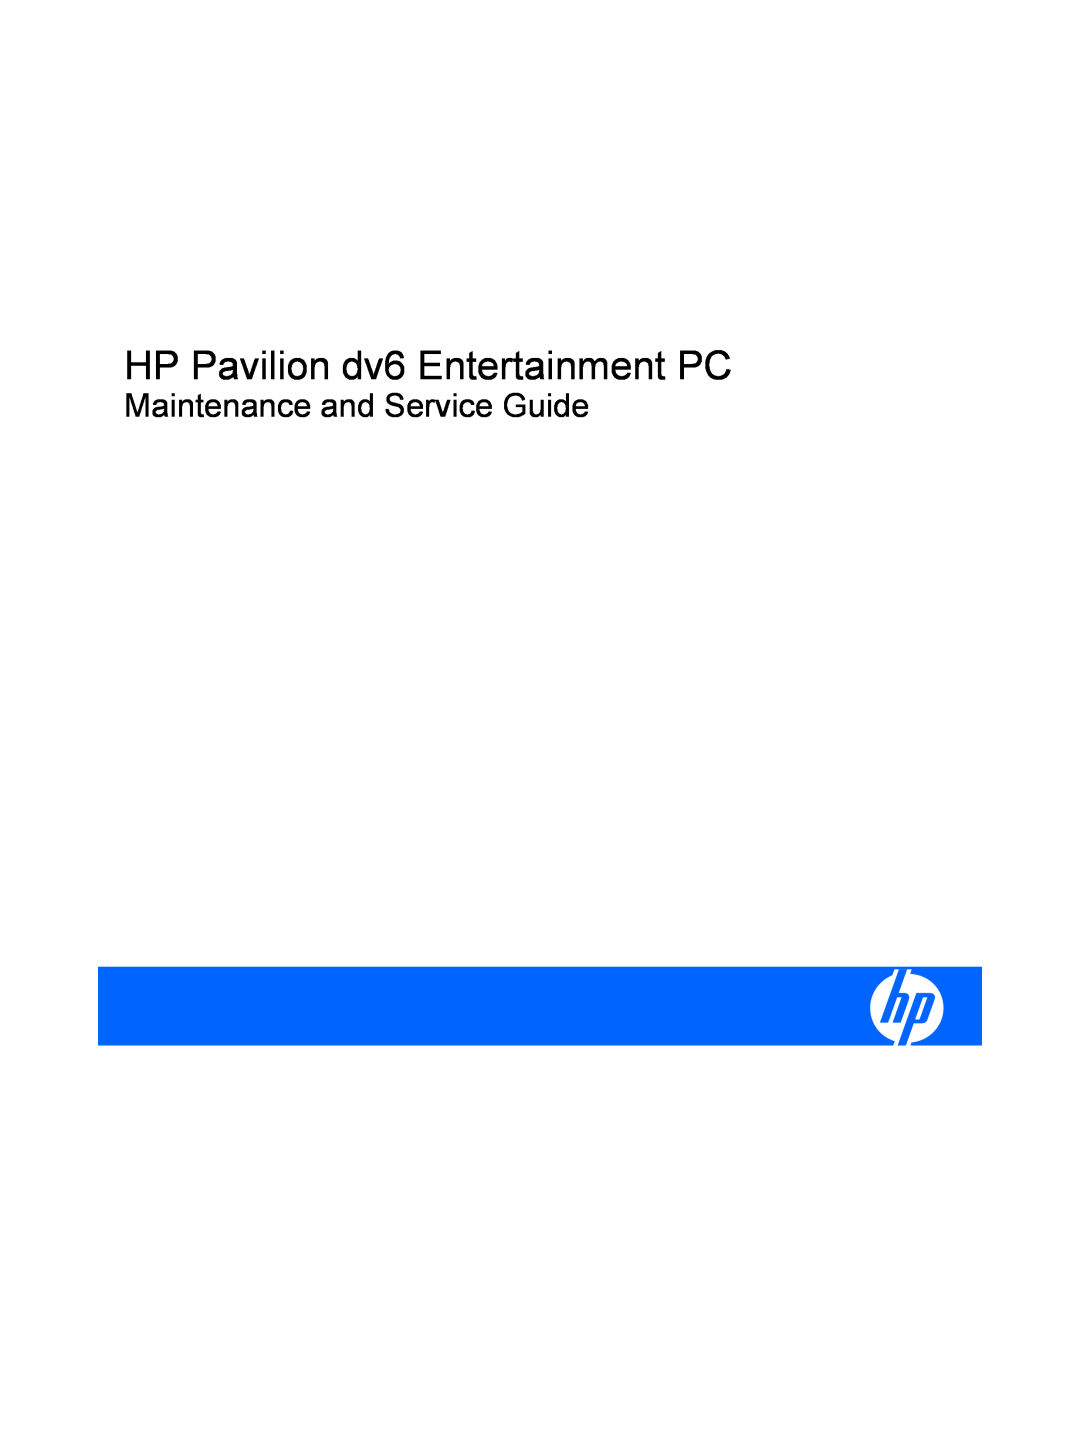 HP DV6 manual HP Pavilion dv6 Entertainment PC, Maintenance and Service Guide 